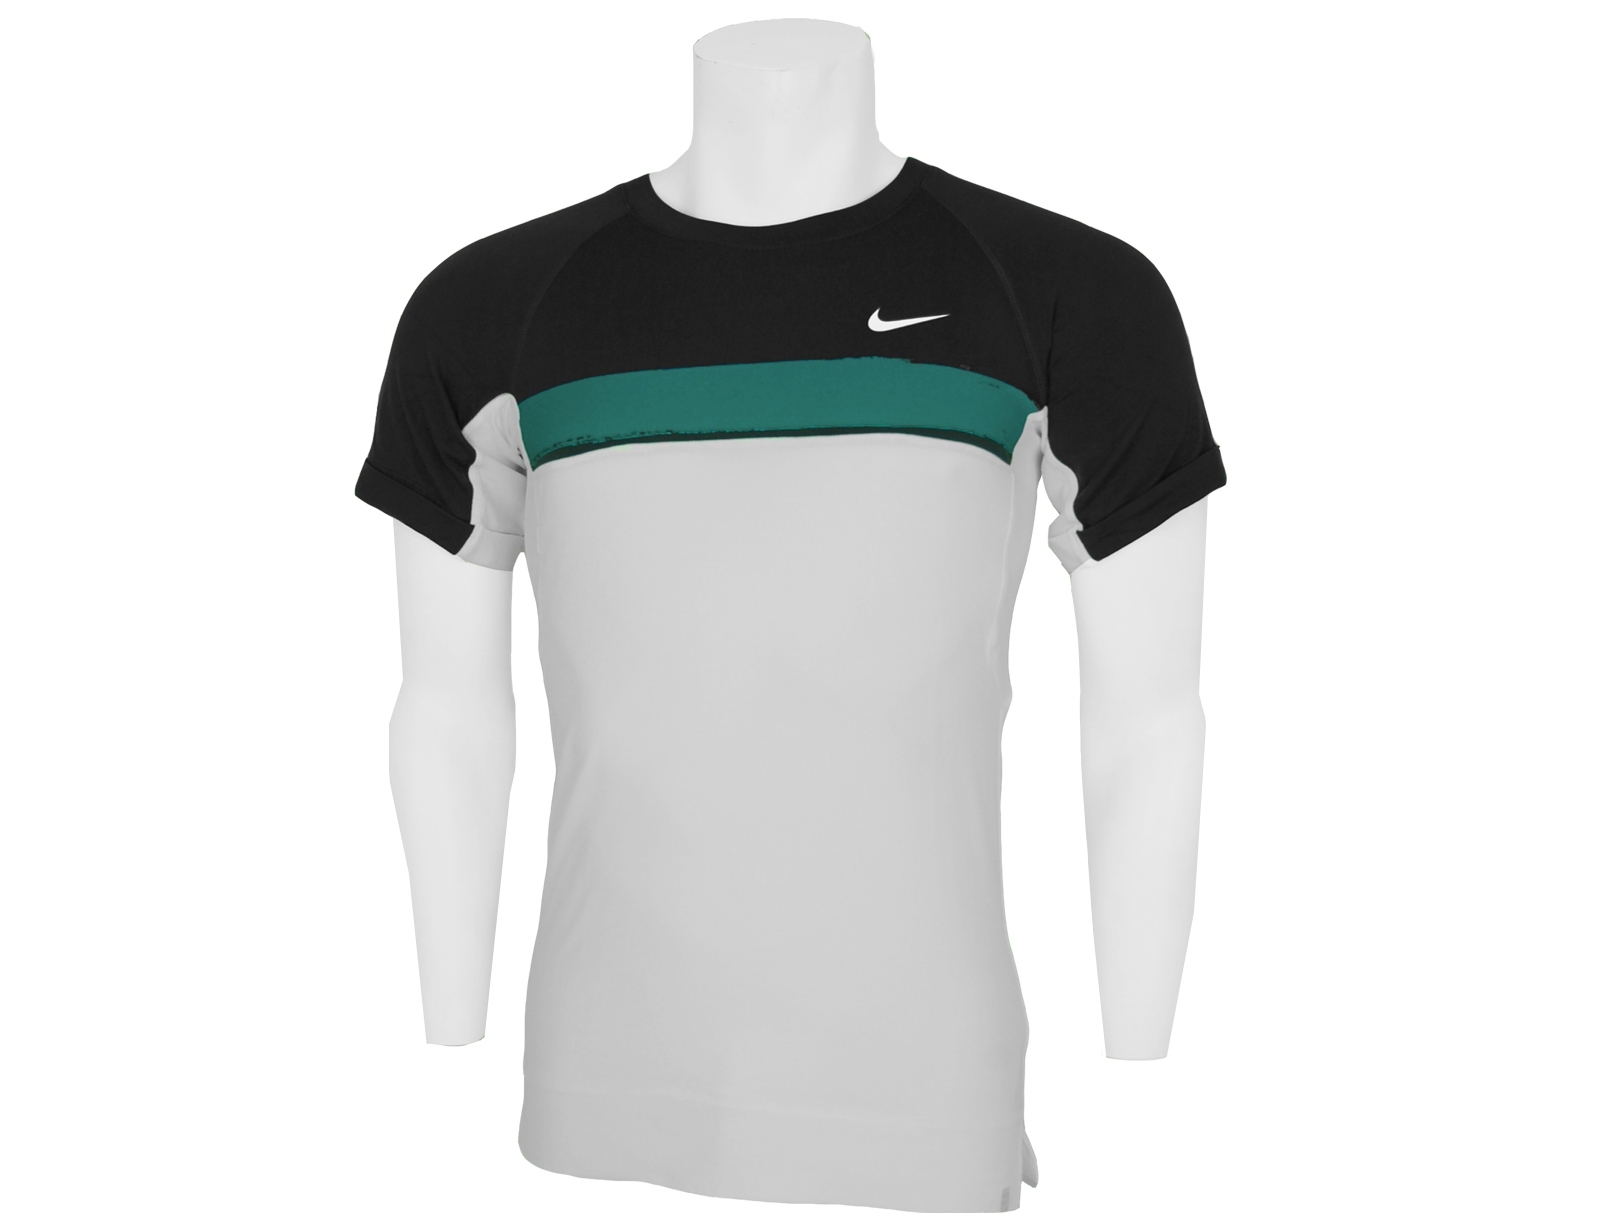 Avantisport - Nike - Bold Crew - Nike Tennis T-shirt